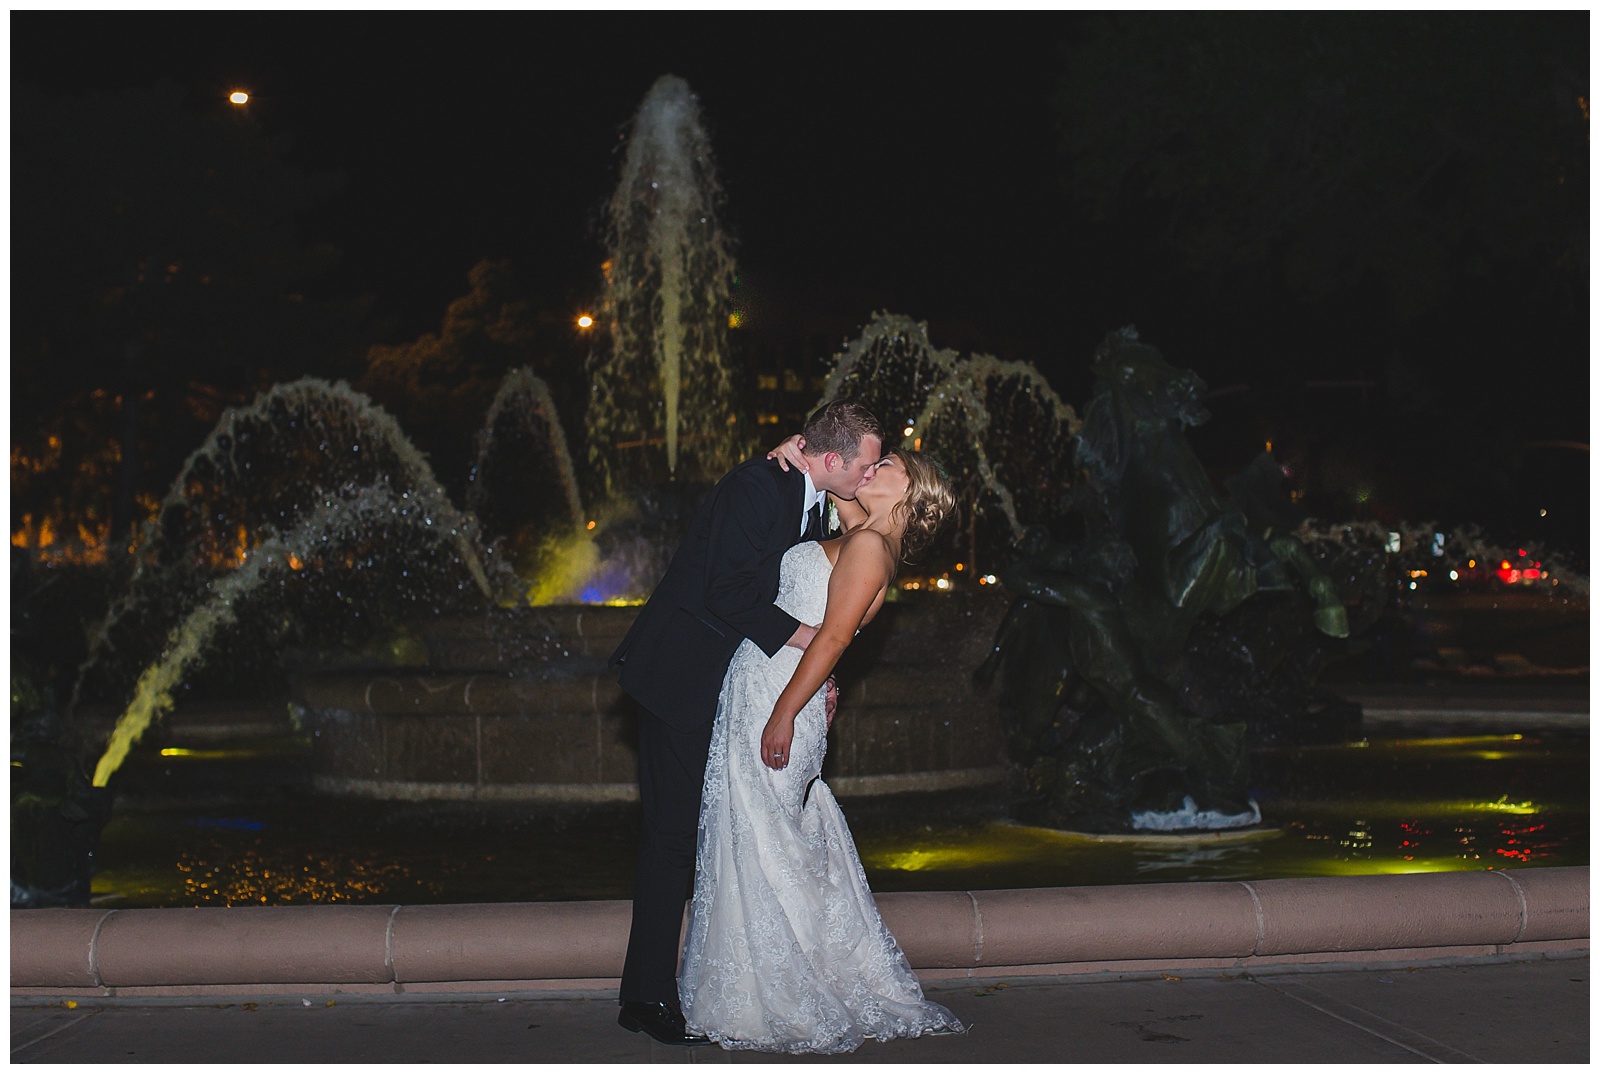 Wedding photography at the J.C. Nichols Memorial Fountain in Kansas City.